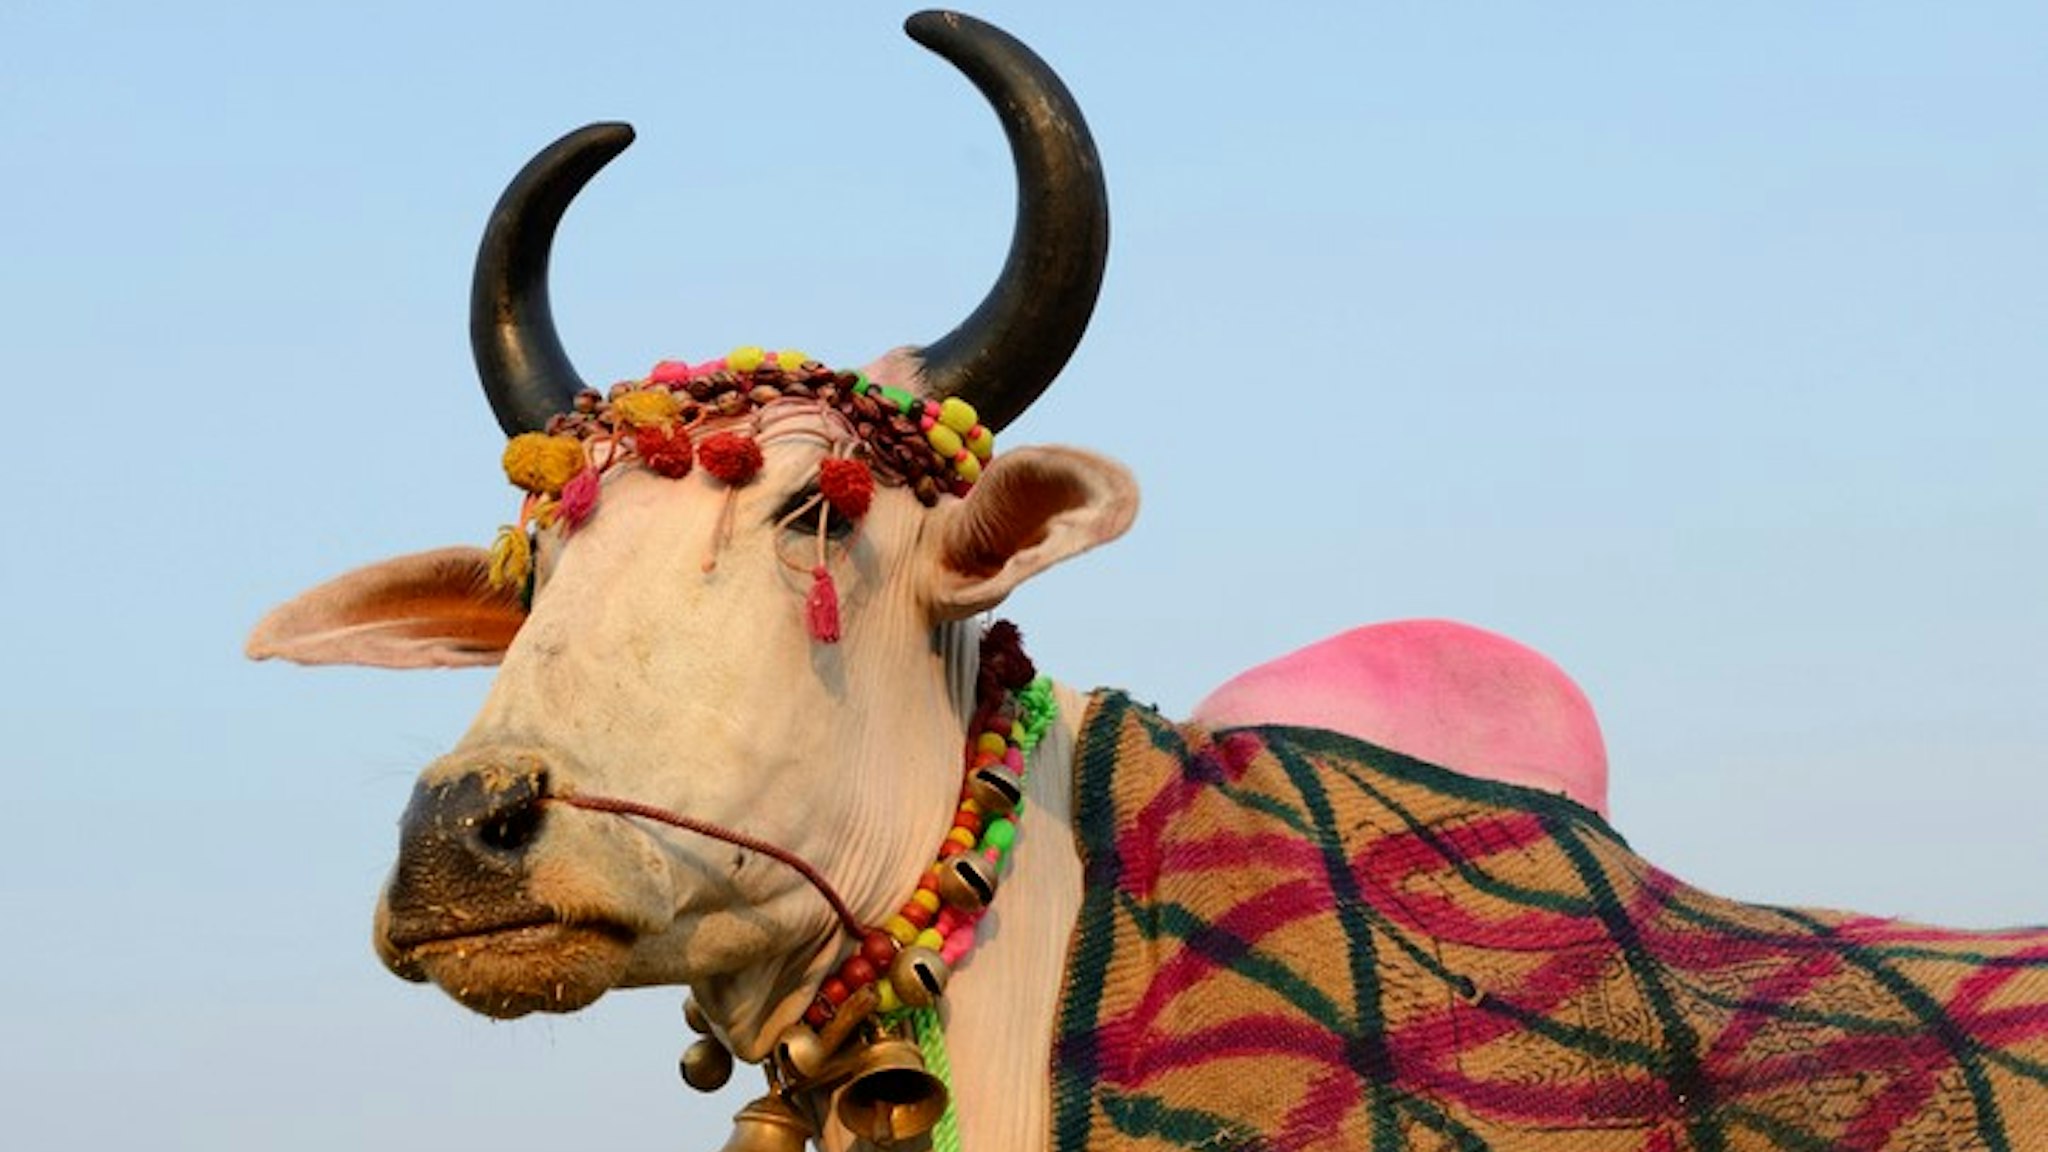 India, Bihar, Patna region, Sonepur livestock fair, Cattle market, Prize cow